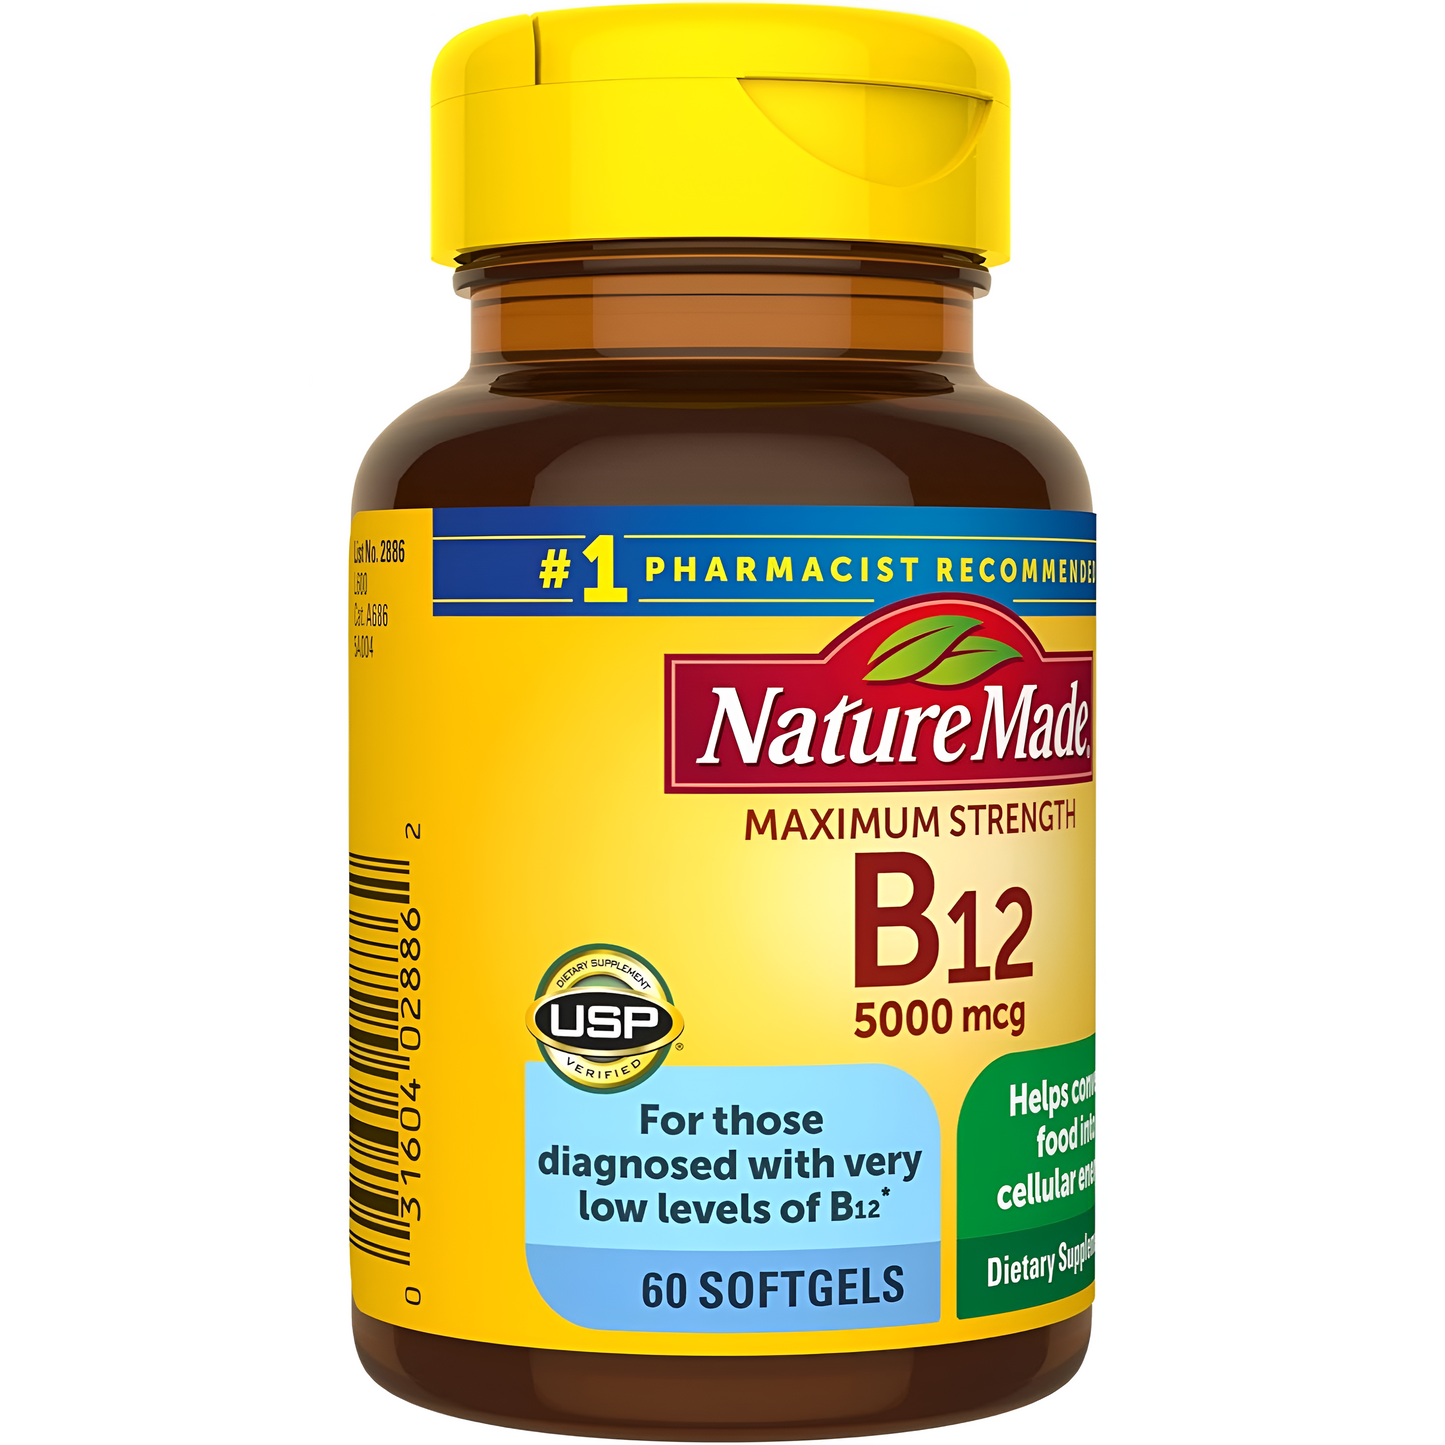 Nature Made Maximum Strength Vitamin B12 5000 mcg 60 Softgels